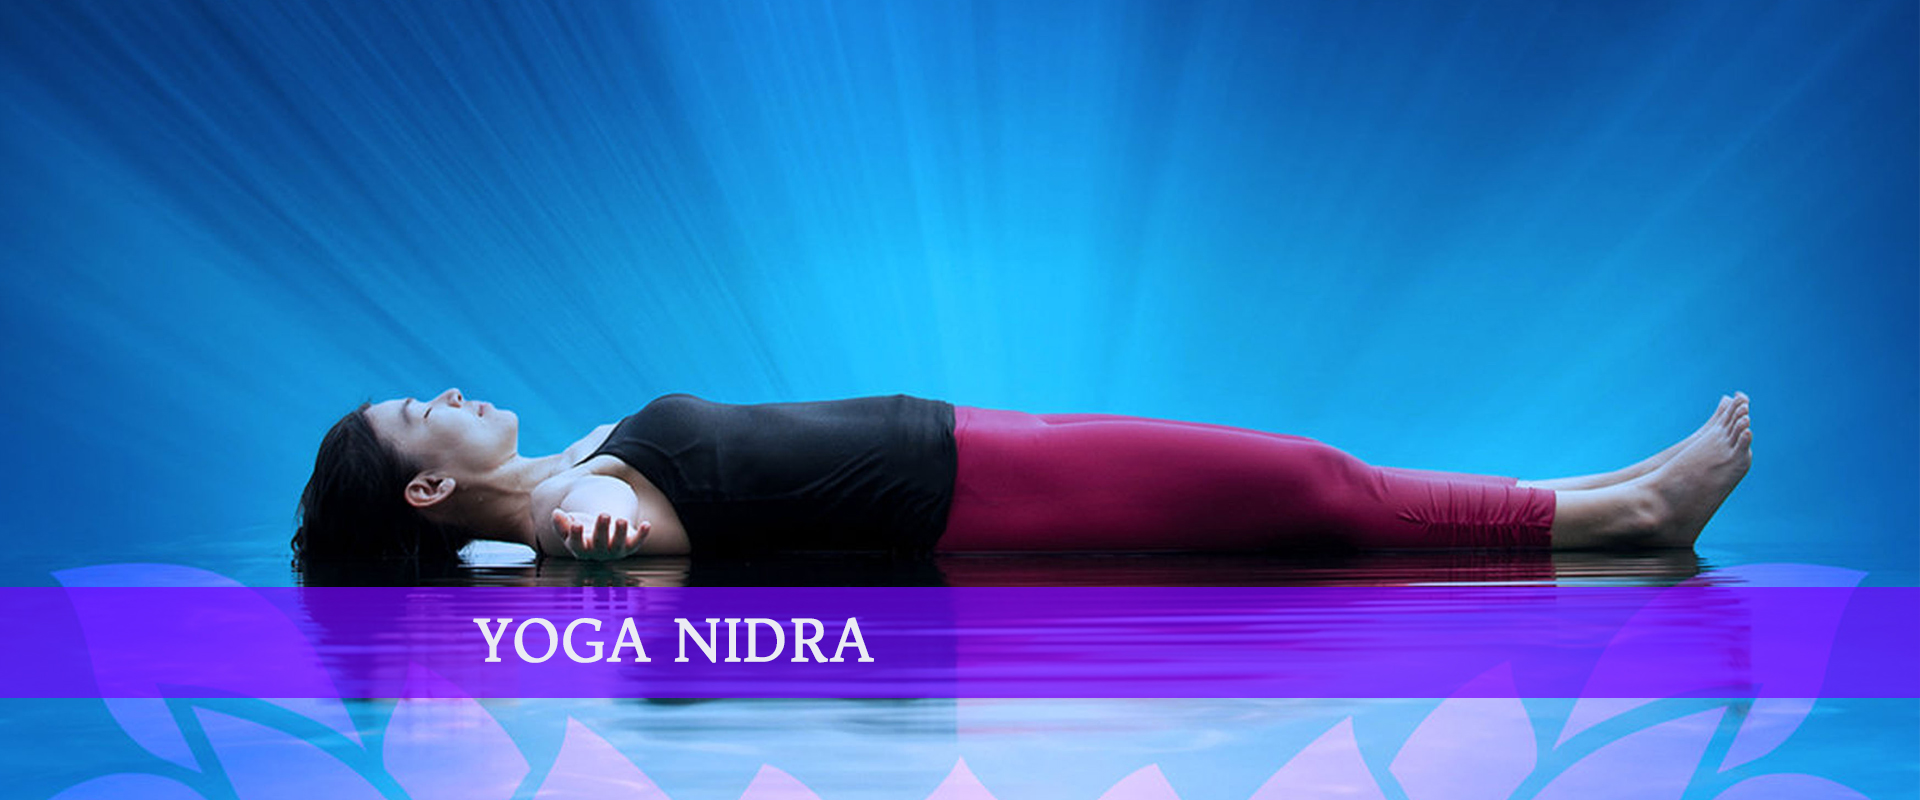 Yoga Nidra - Shanti Yoga Roma